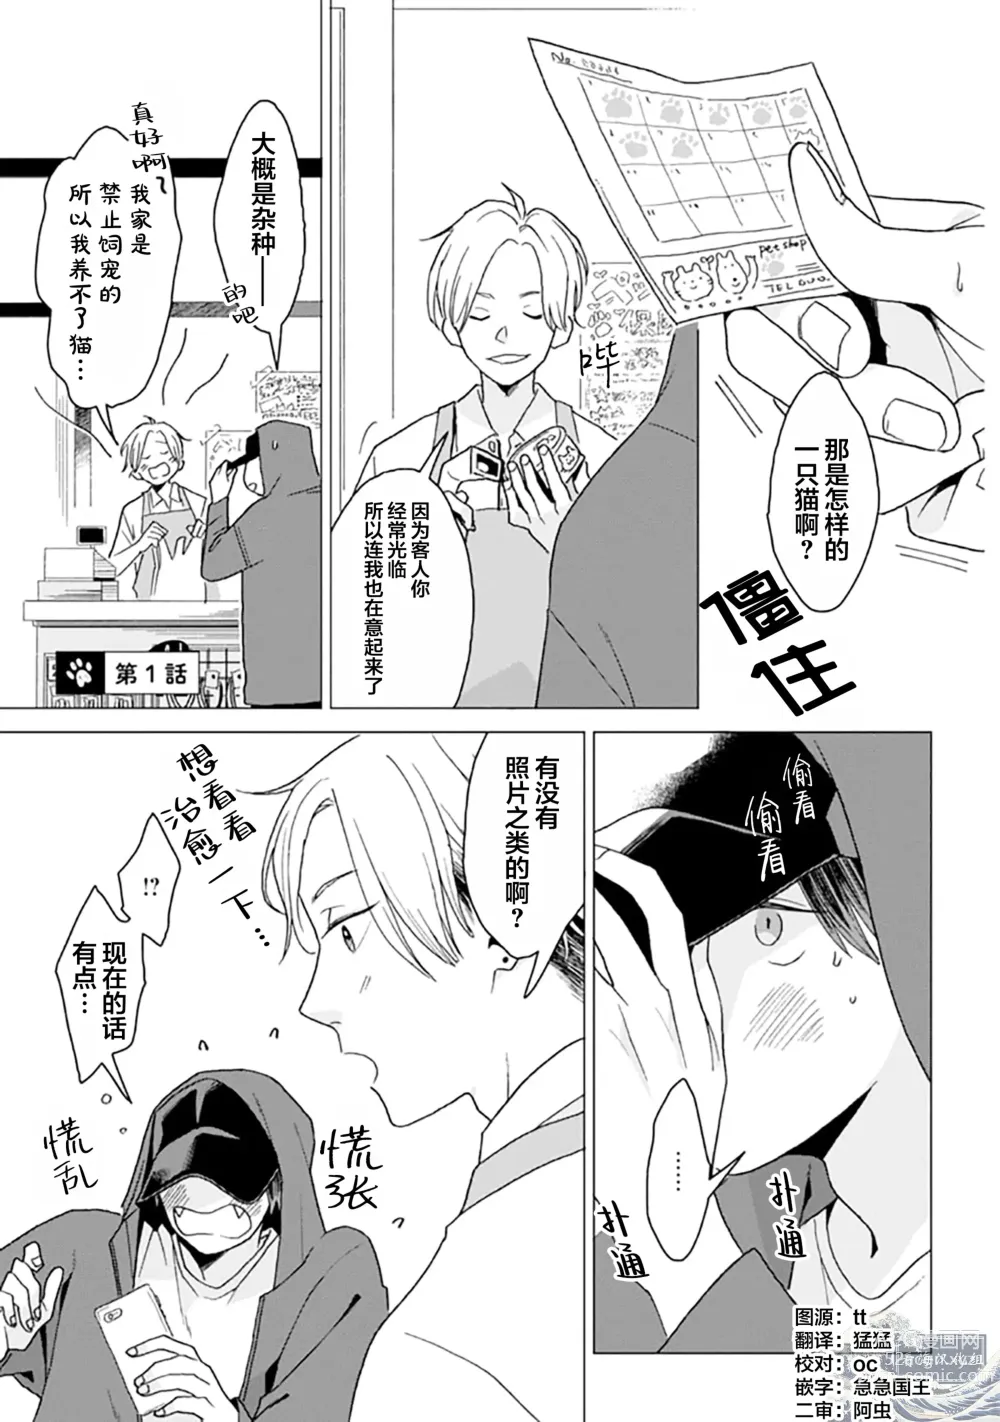 Page 5 of manga 恋爱中的猫咪想被抚摸